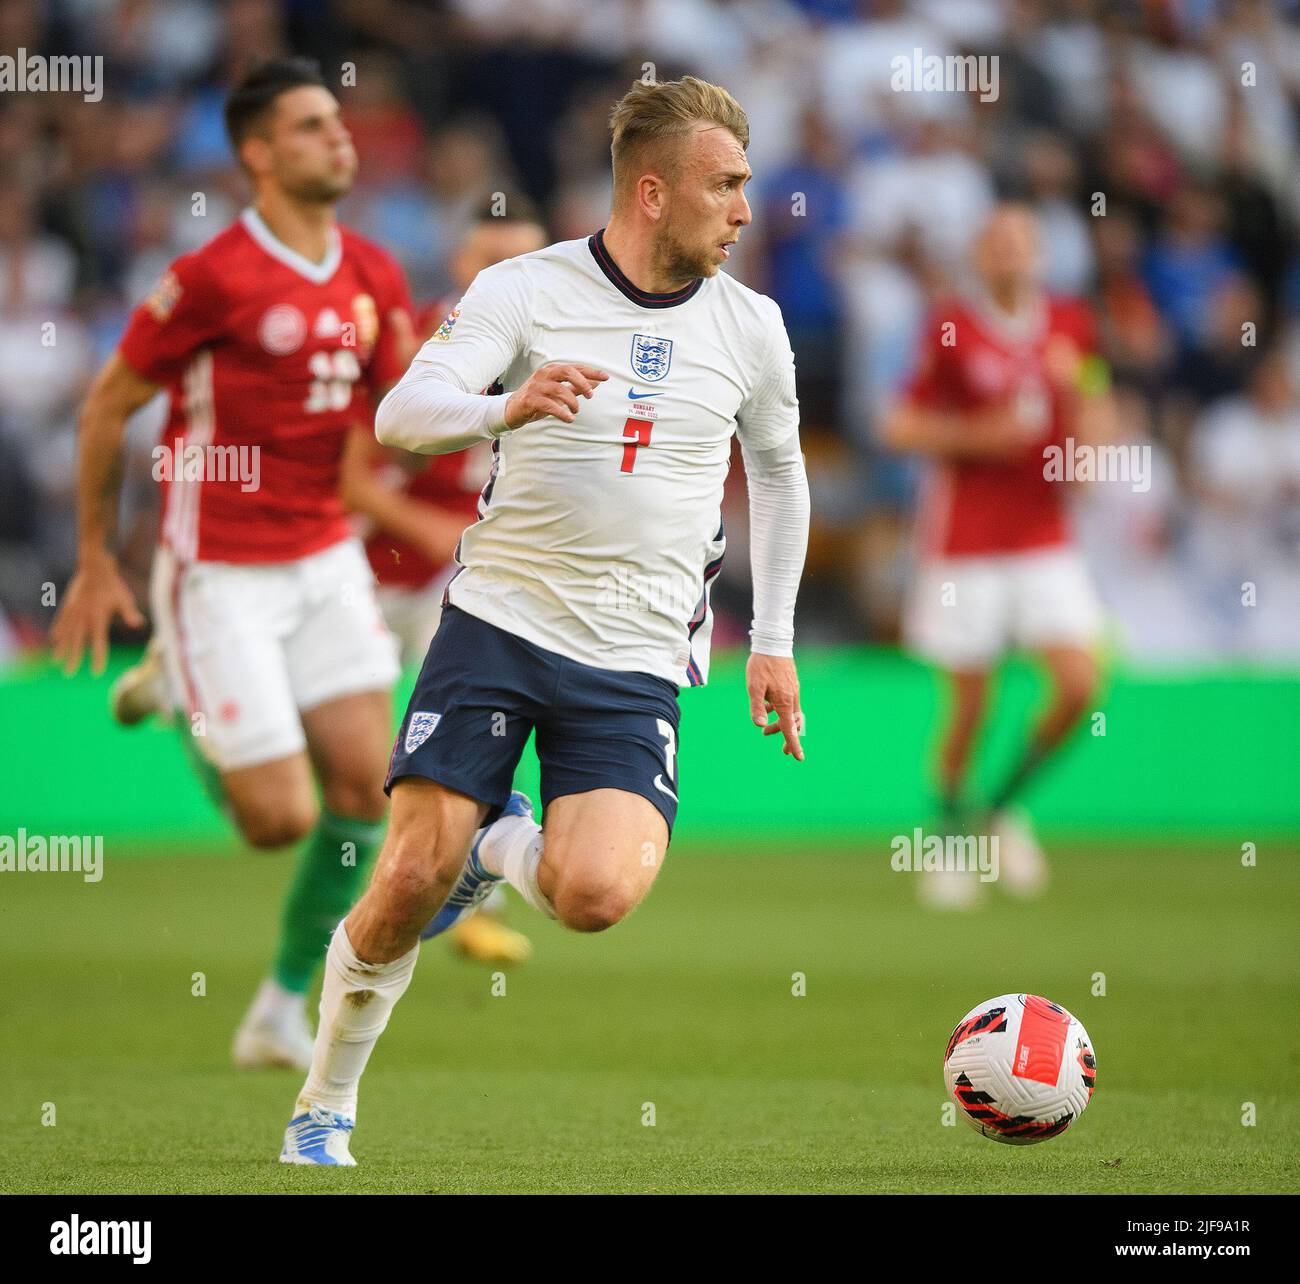 England v Hungary - UEFA Nations League. 14/6/22. Jarrod Bowen during the Nations League match against Hungary. Pic : Mark Pain / Alamy Stock Photo